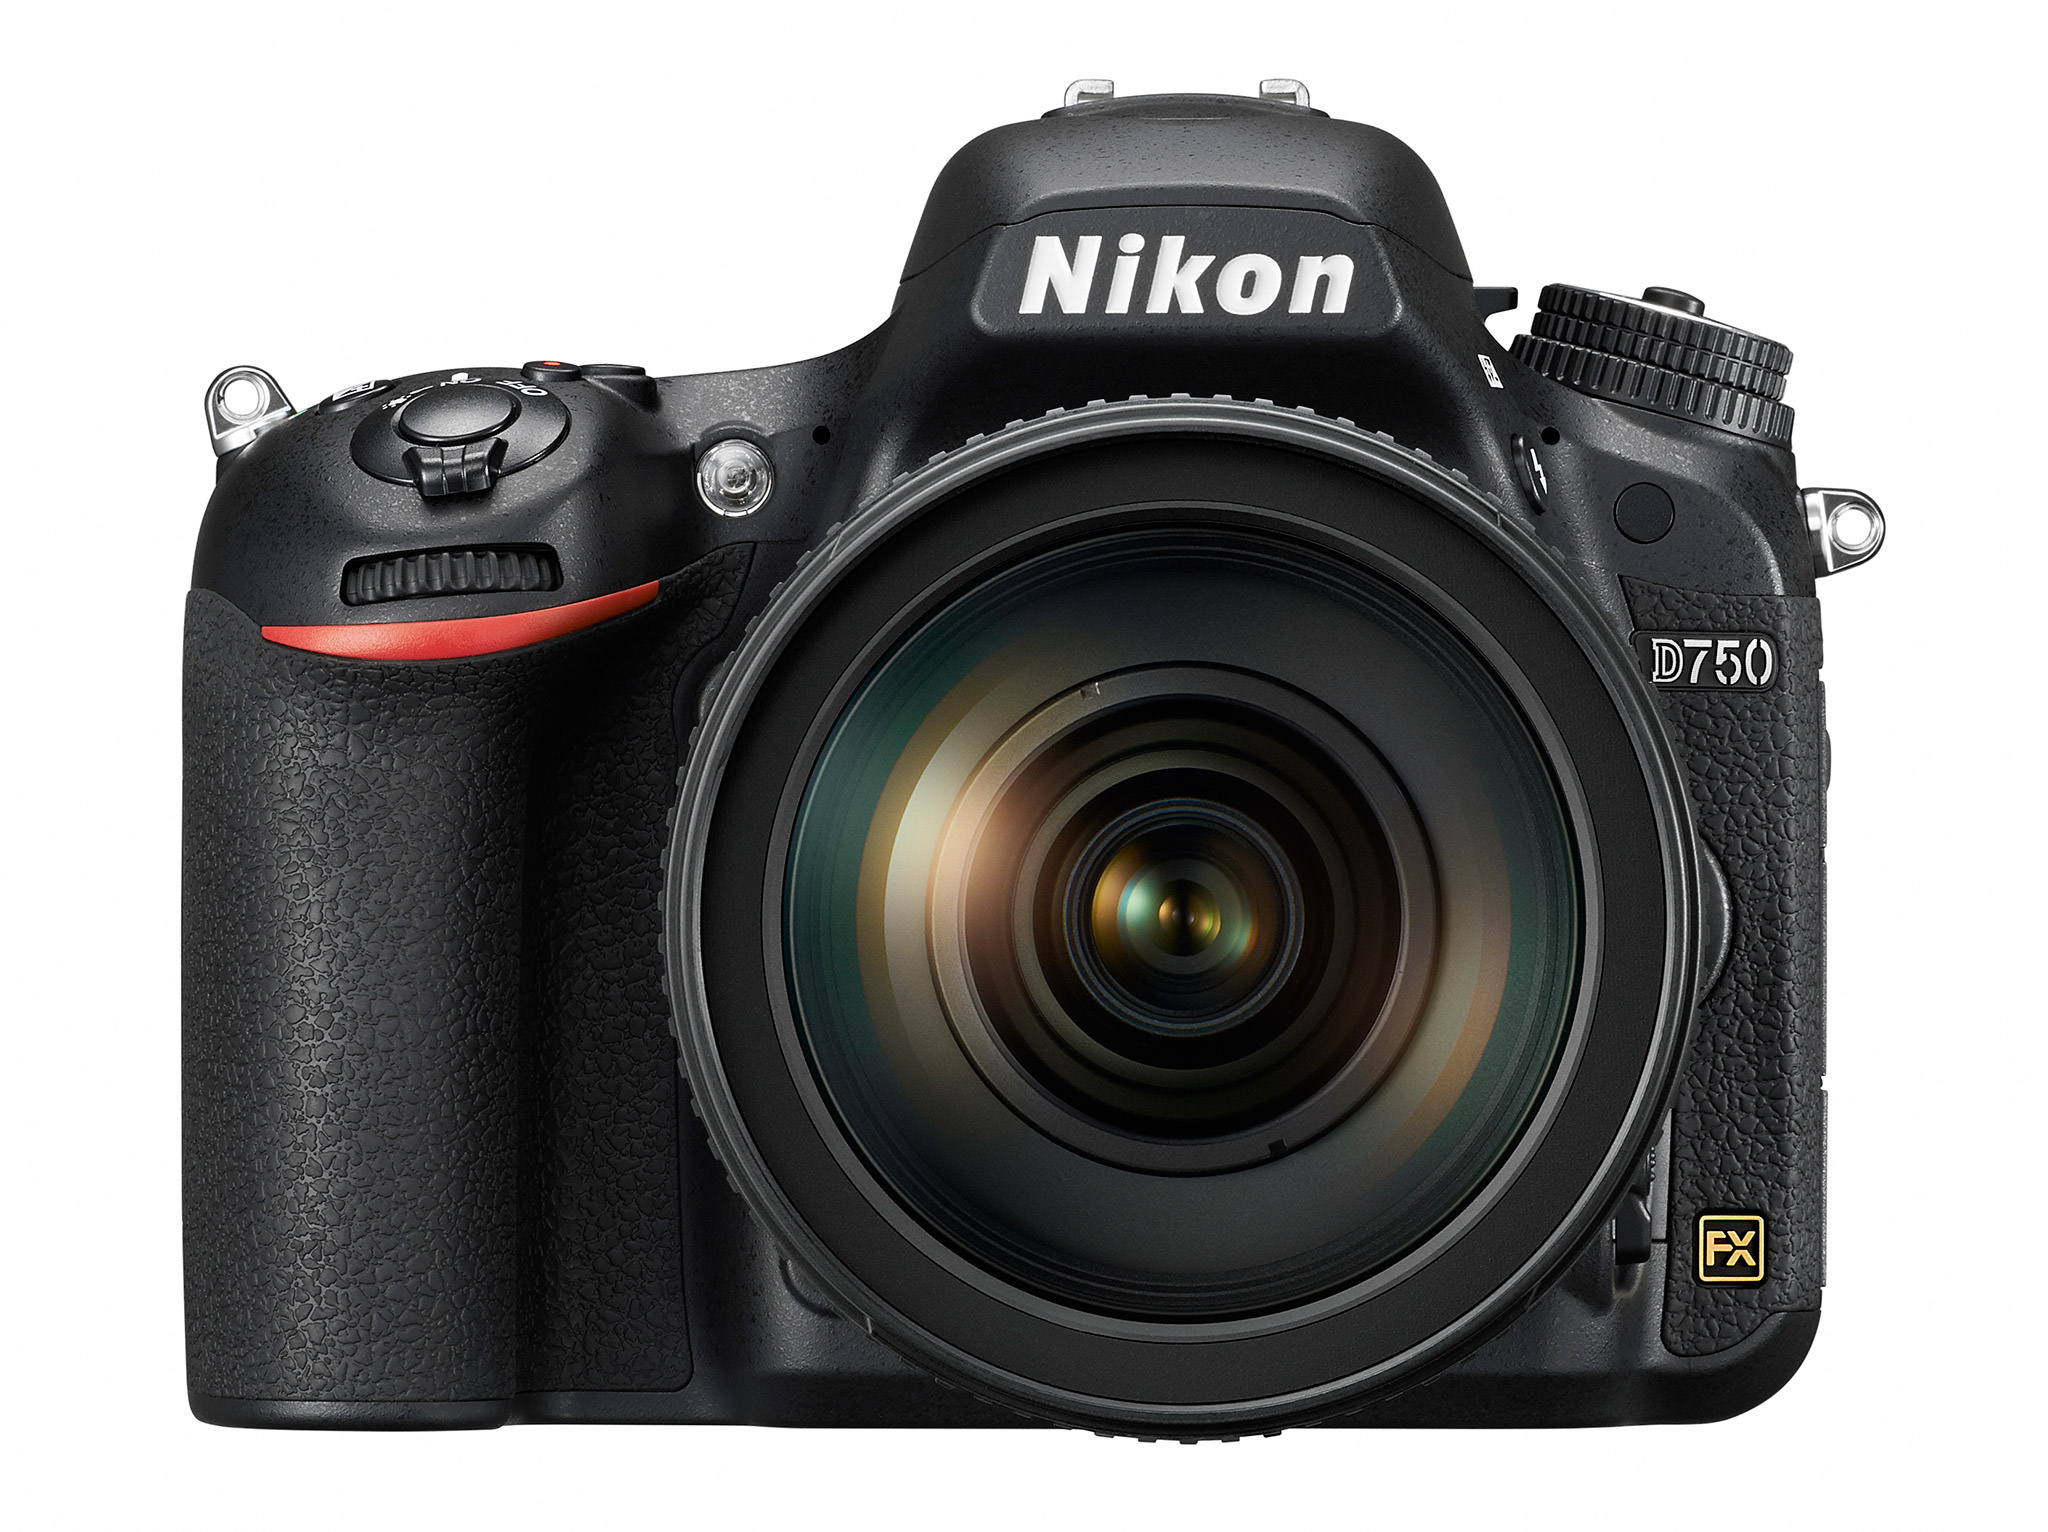 Apoyarse Christchurch Consistente Nikon D750 Review